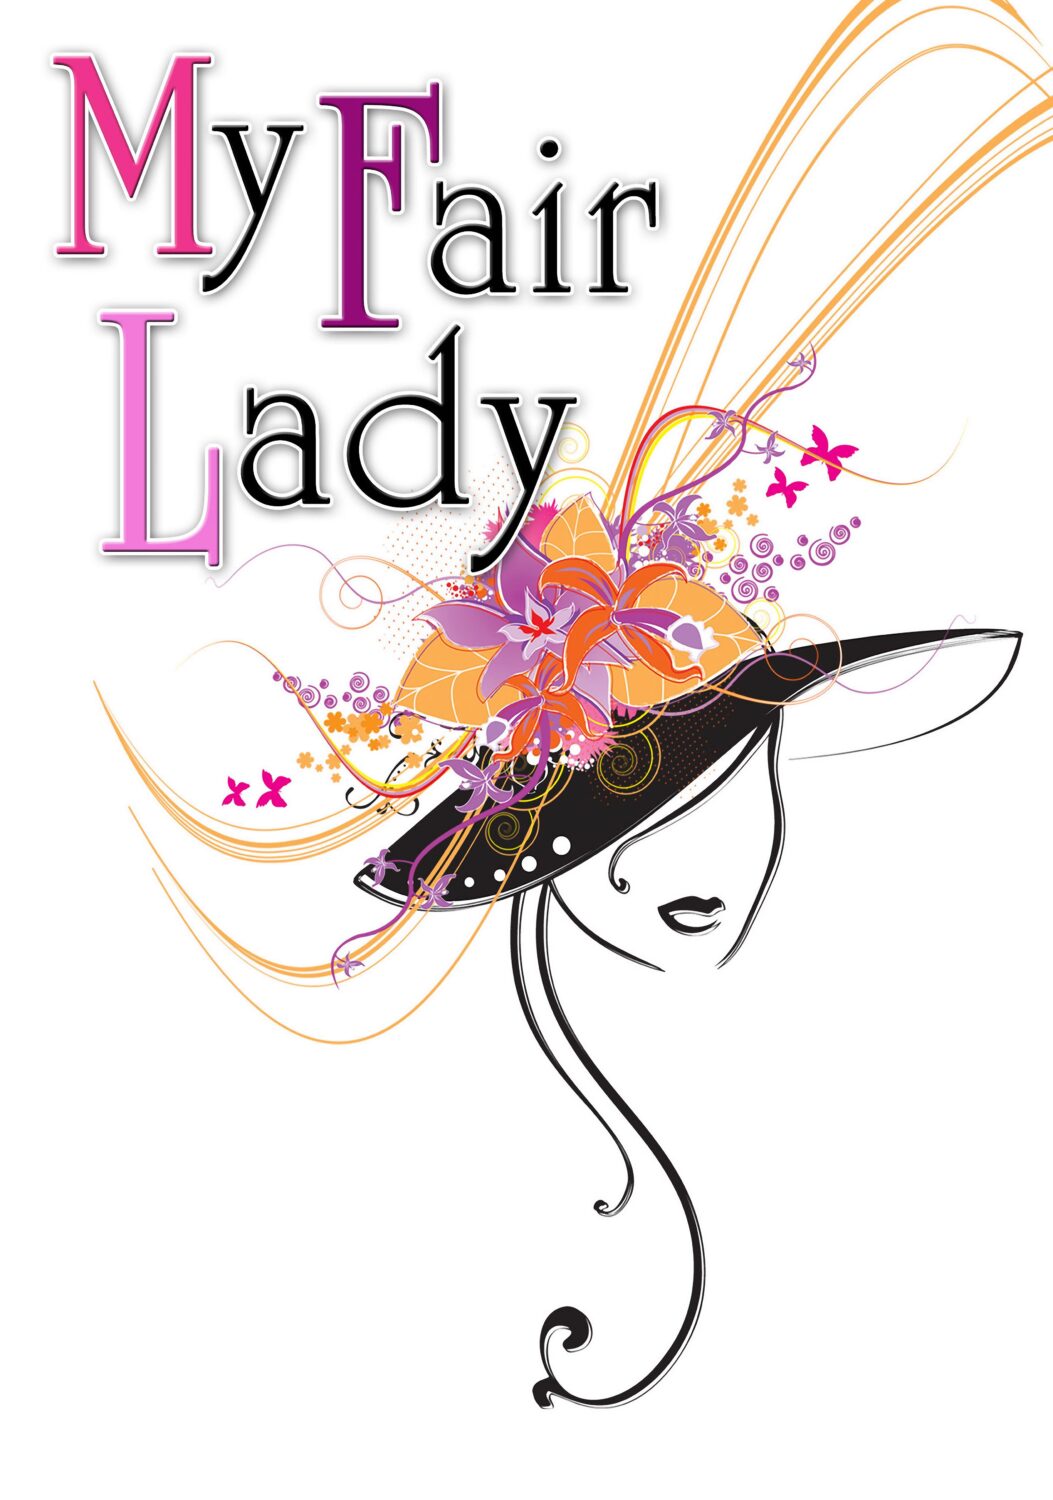 My Fair Lady Musical Theatre Art Poster Print